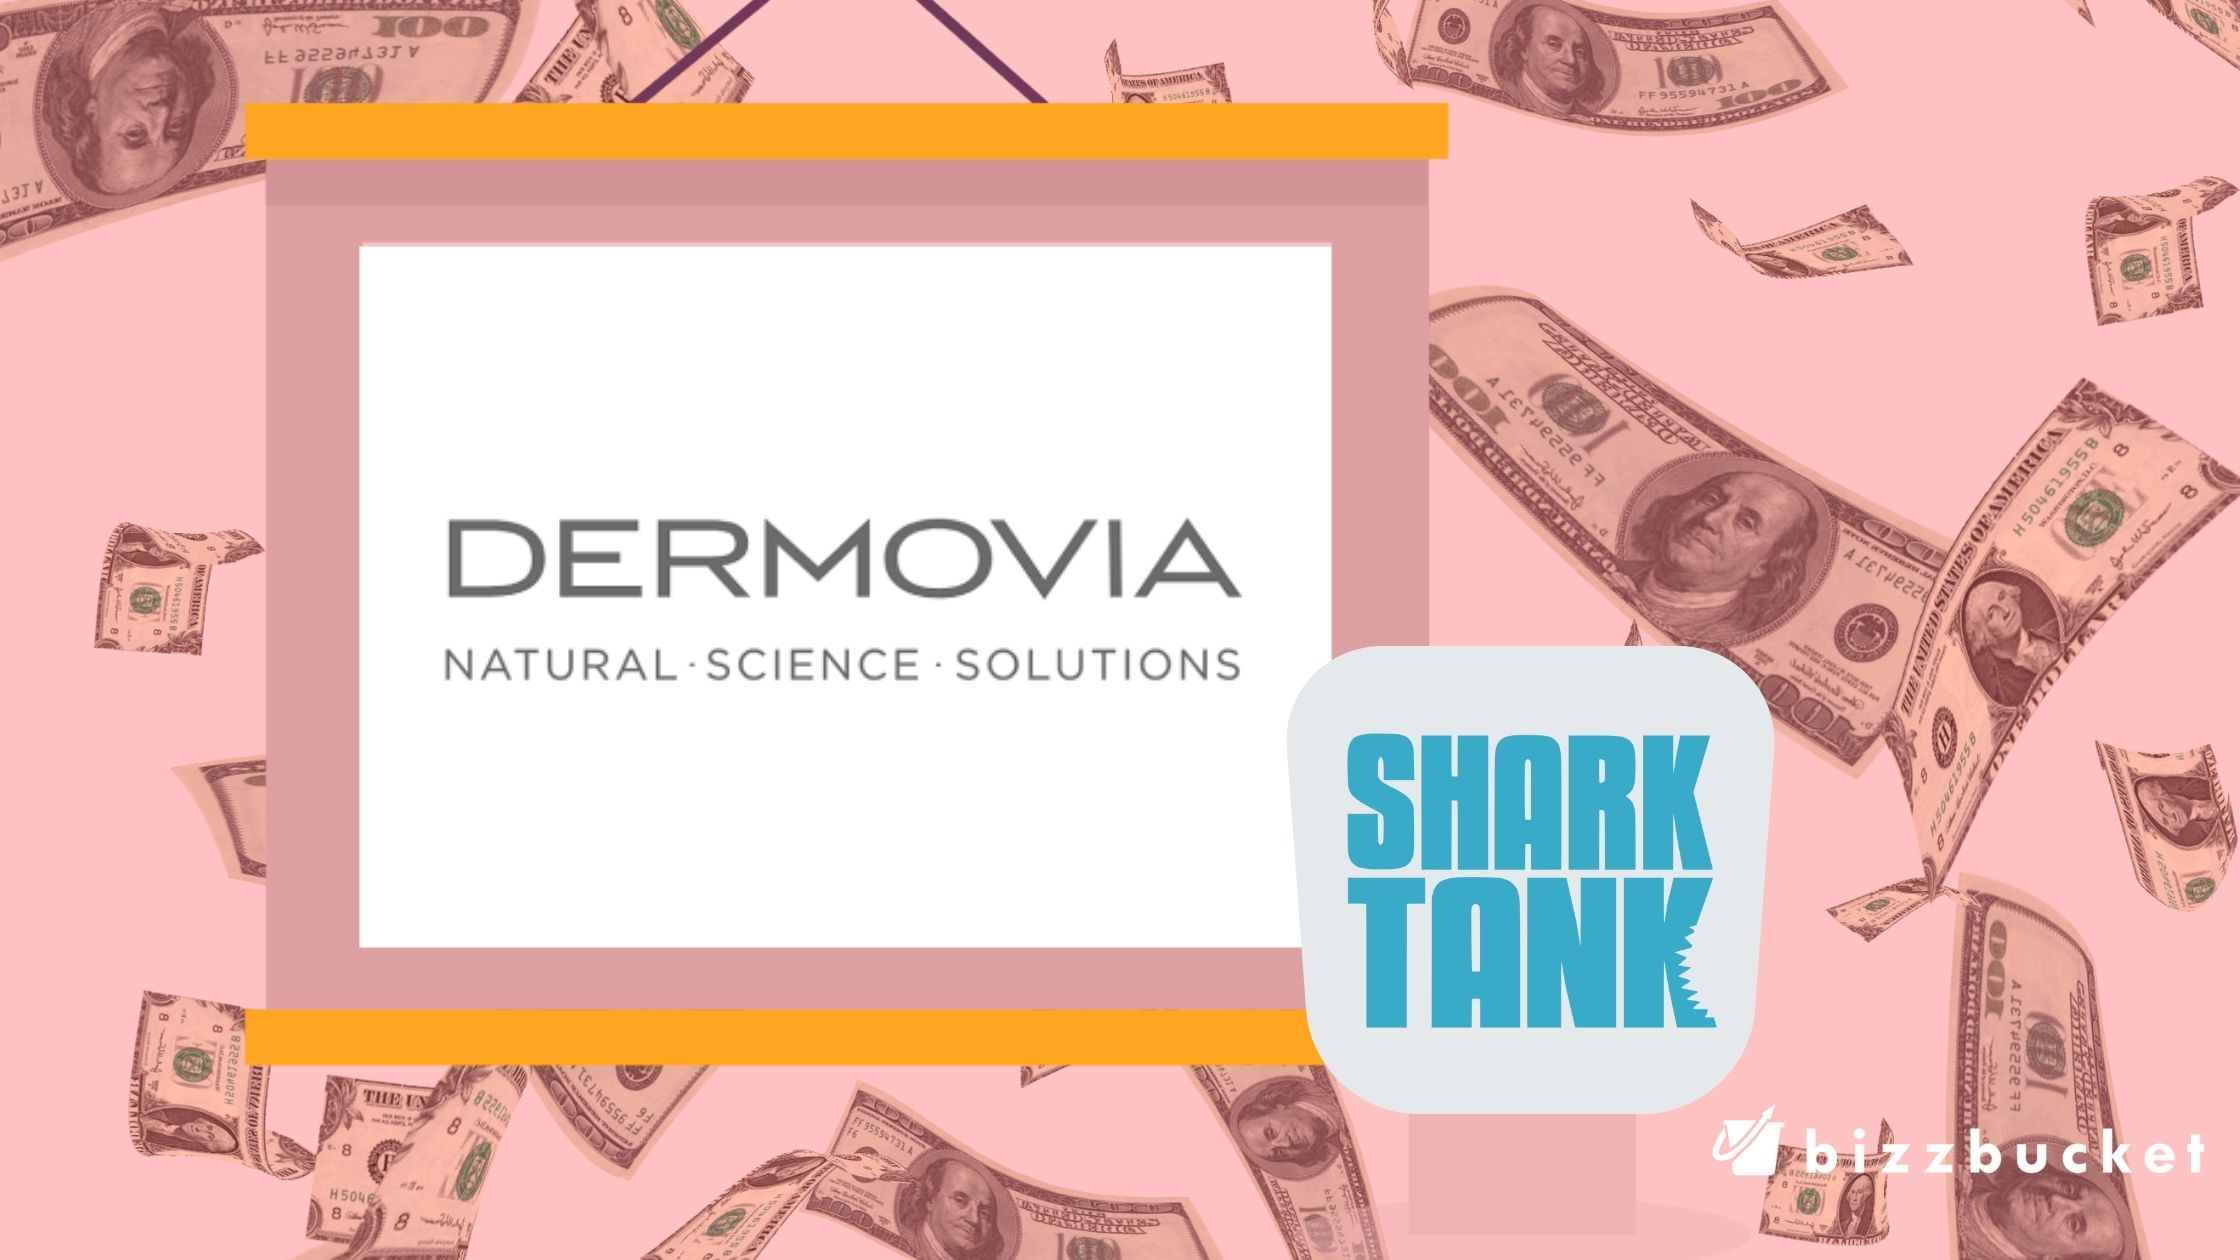 Dermovia shark tank update